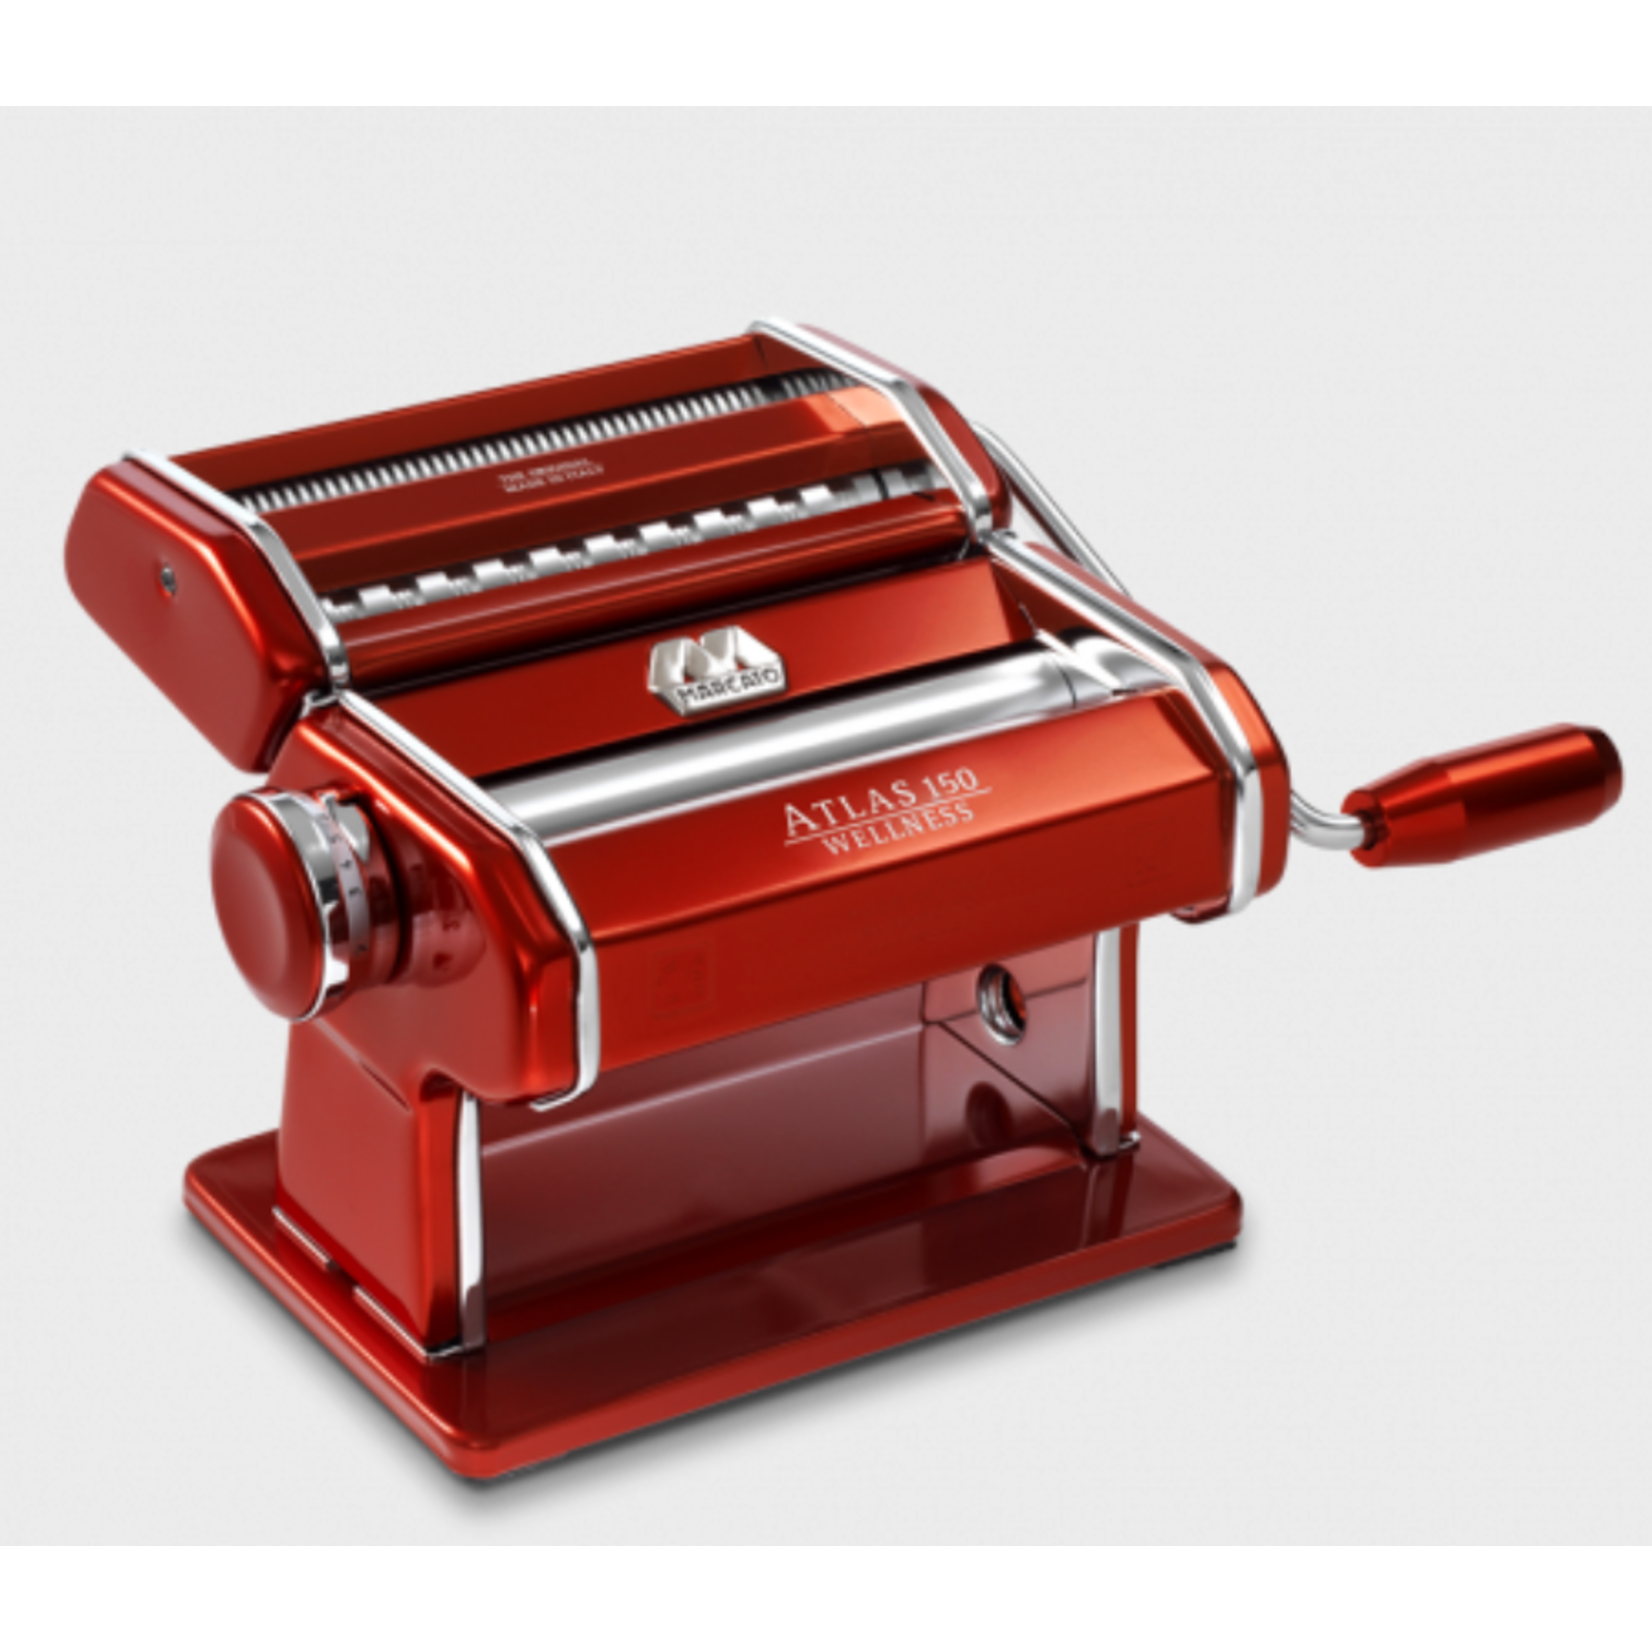 ATLAS MARCATO Atlas 150 Pasta Machine - Red